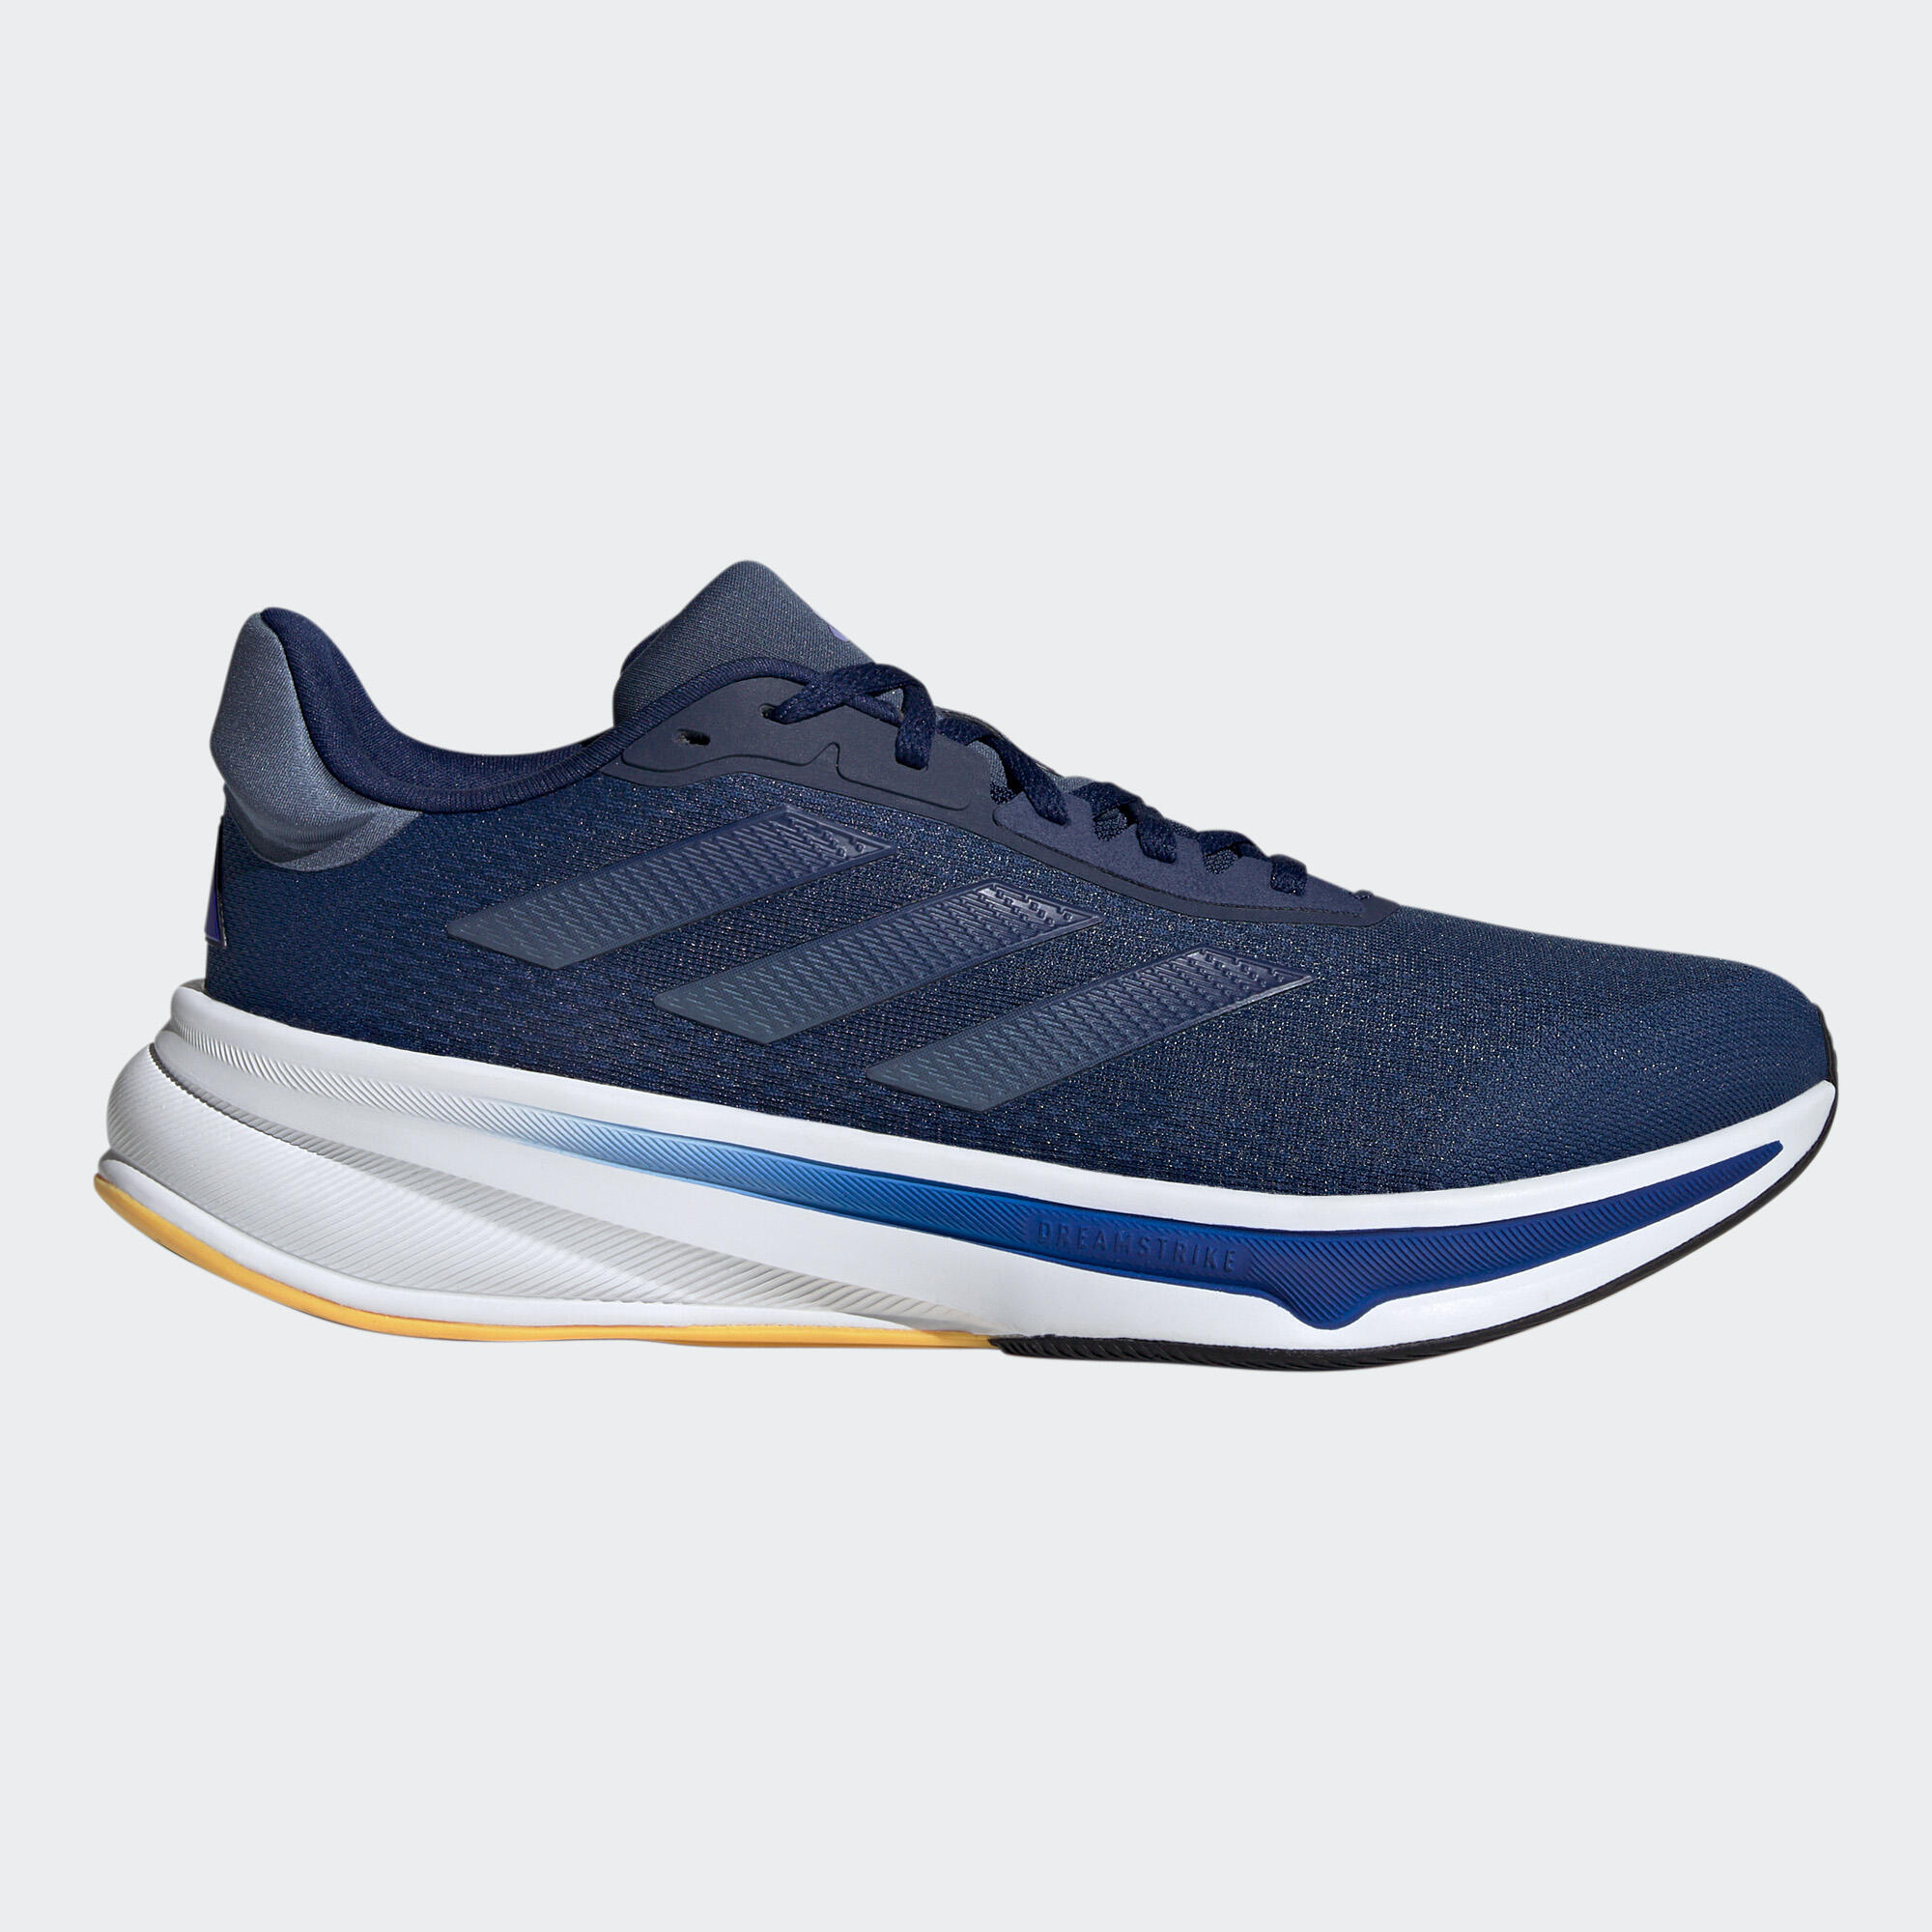 Adidas Men's Response Super Running Shoes - Blue